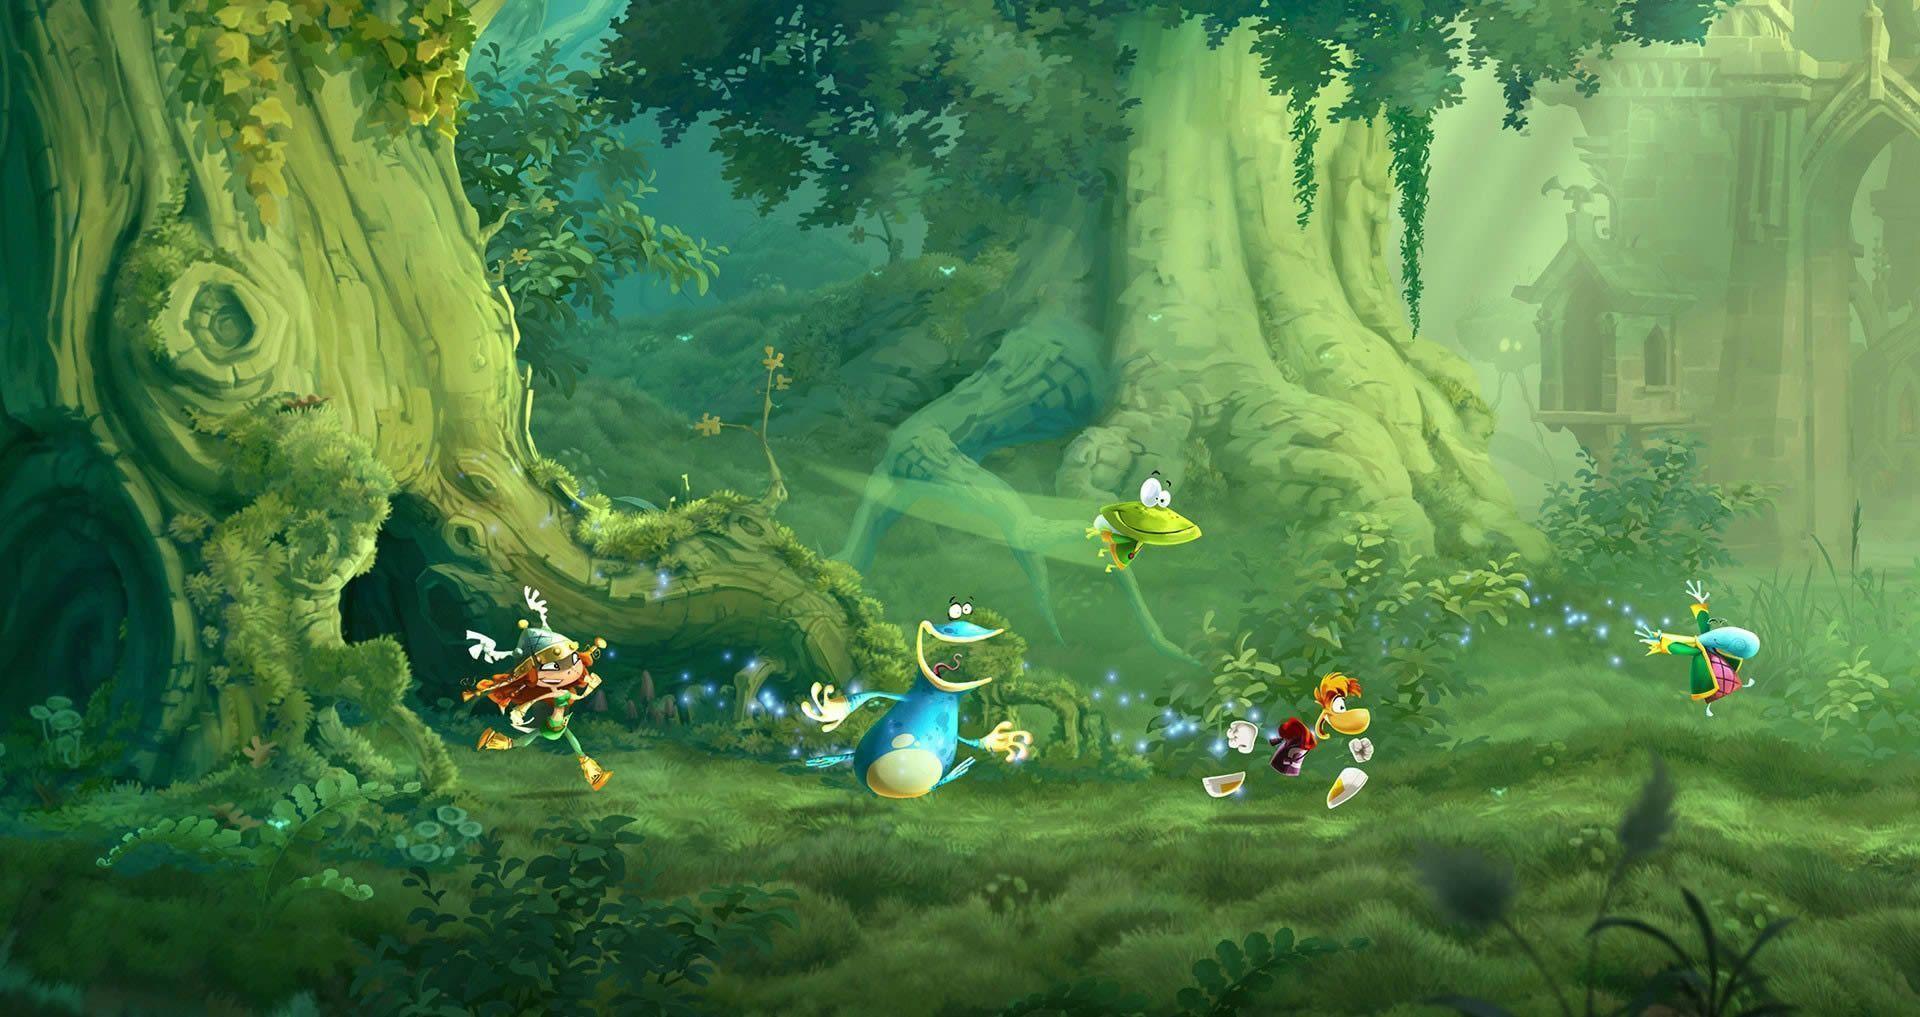 New Rayman Legends screenshots hint at 1080p game resolution